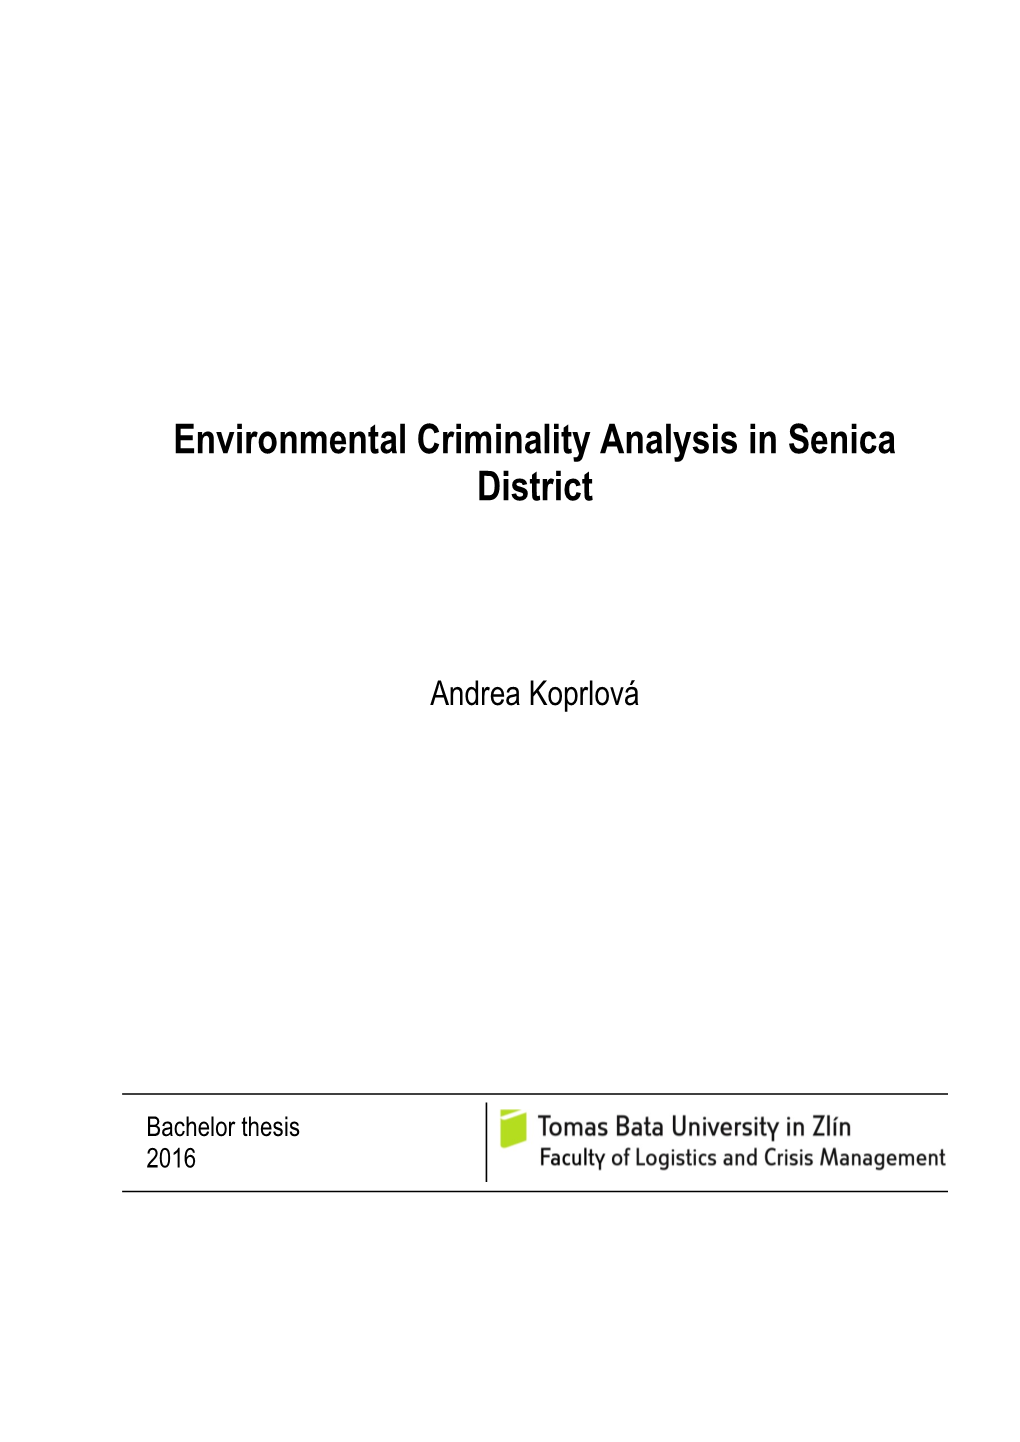 Environmental Criminality Analysis in Senica District